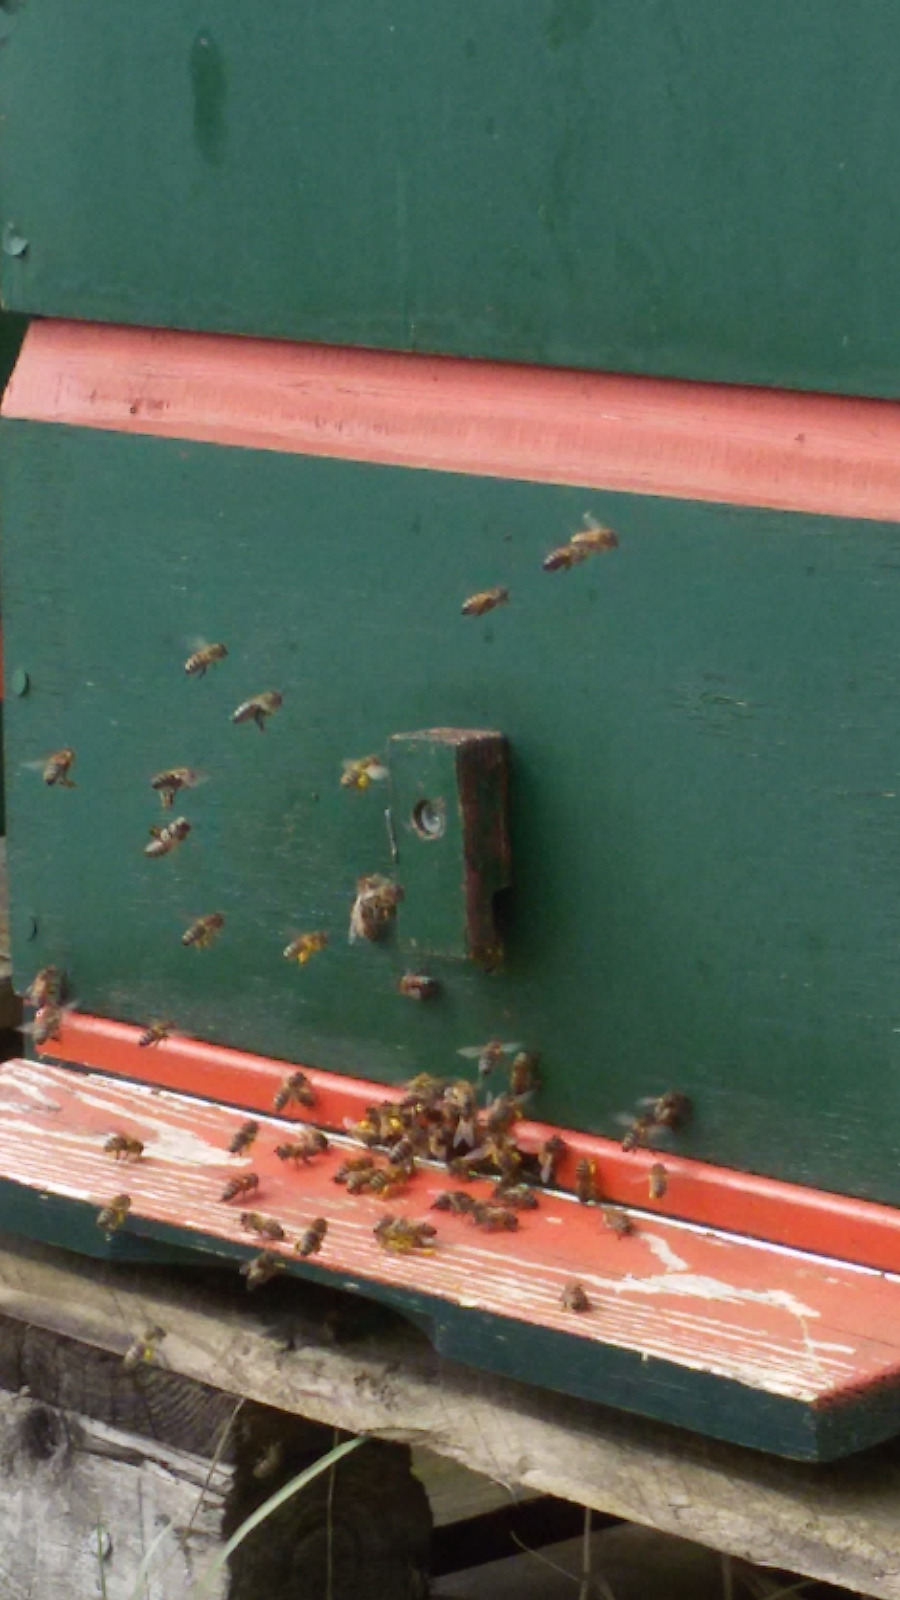 lokale amsterdamse bijen maken honing